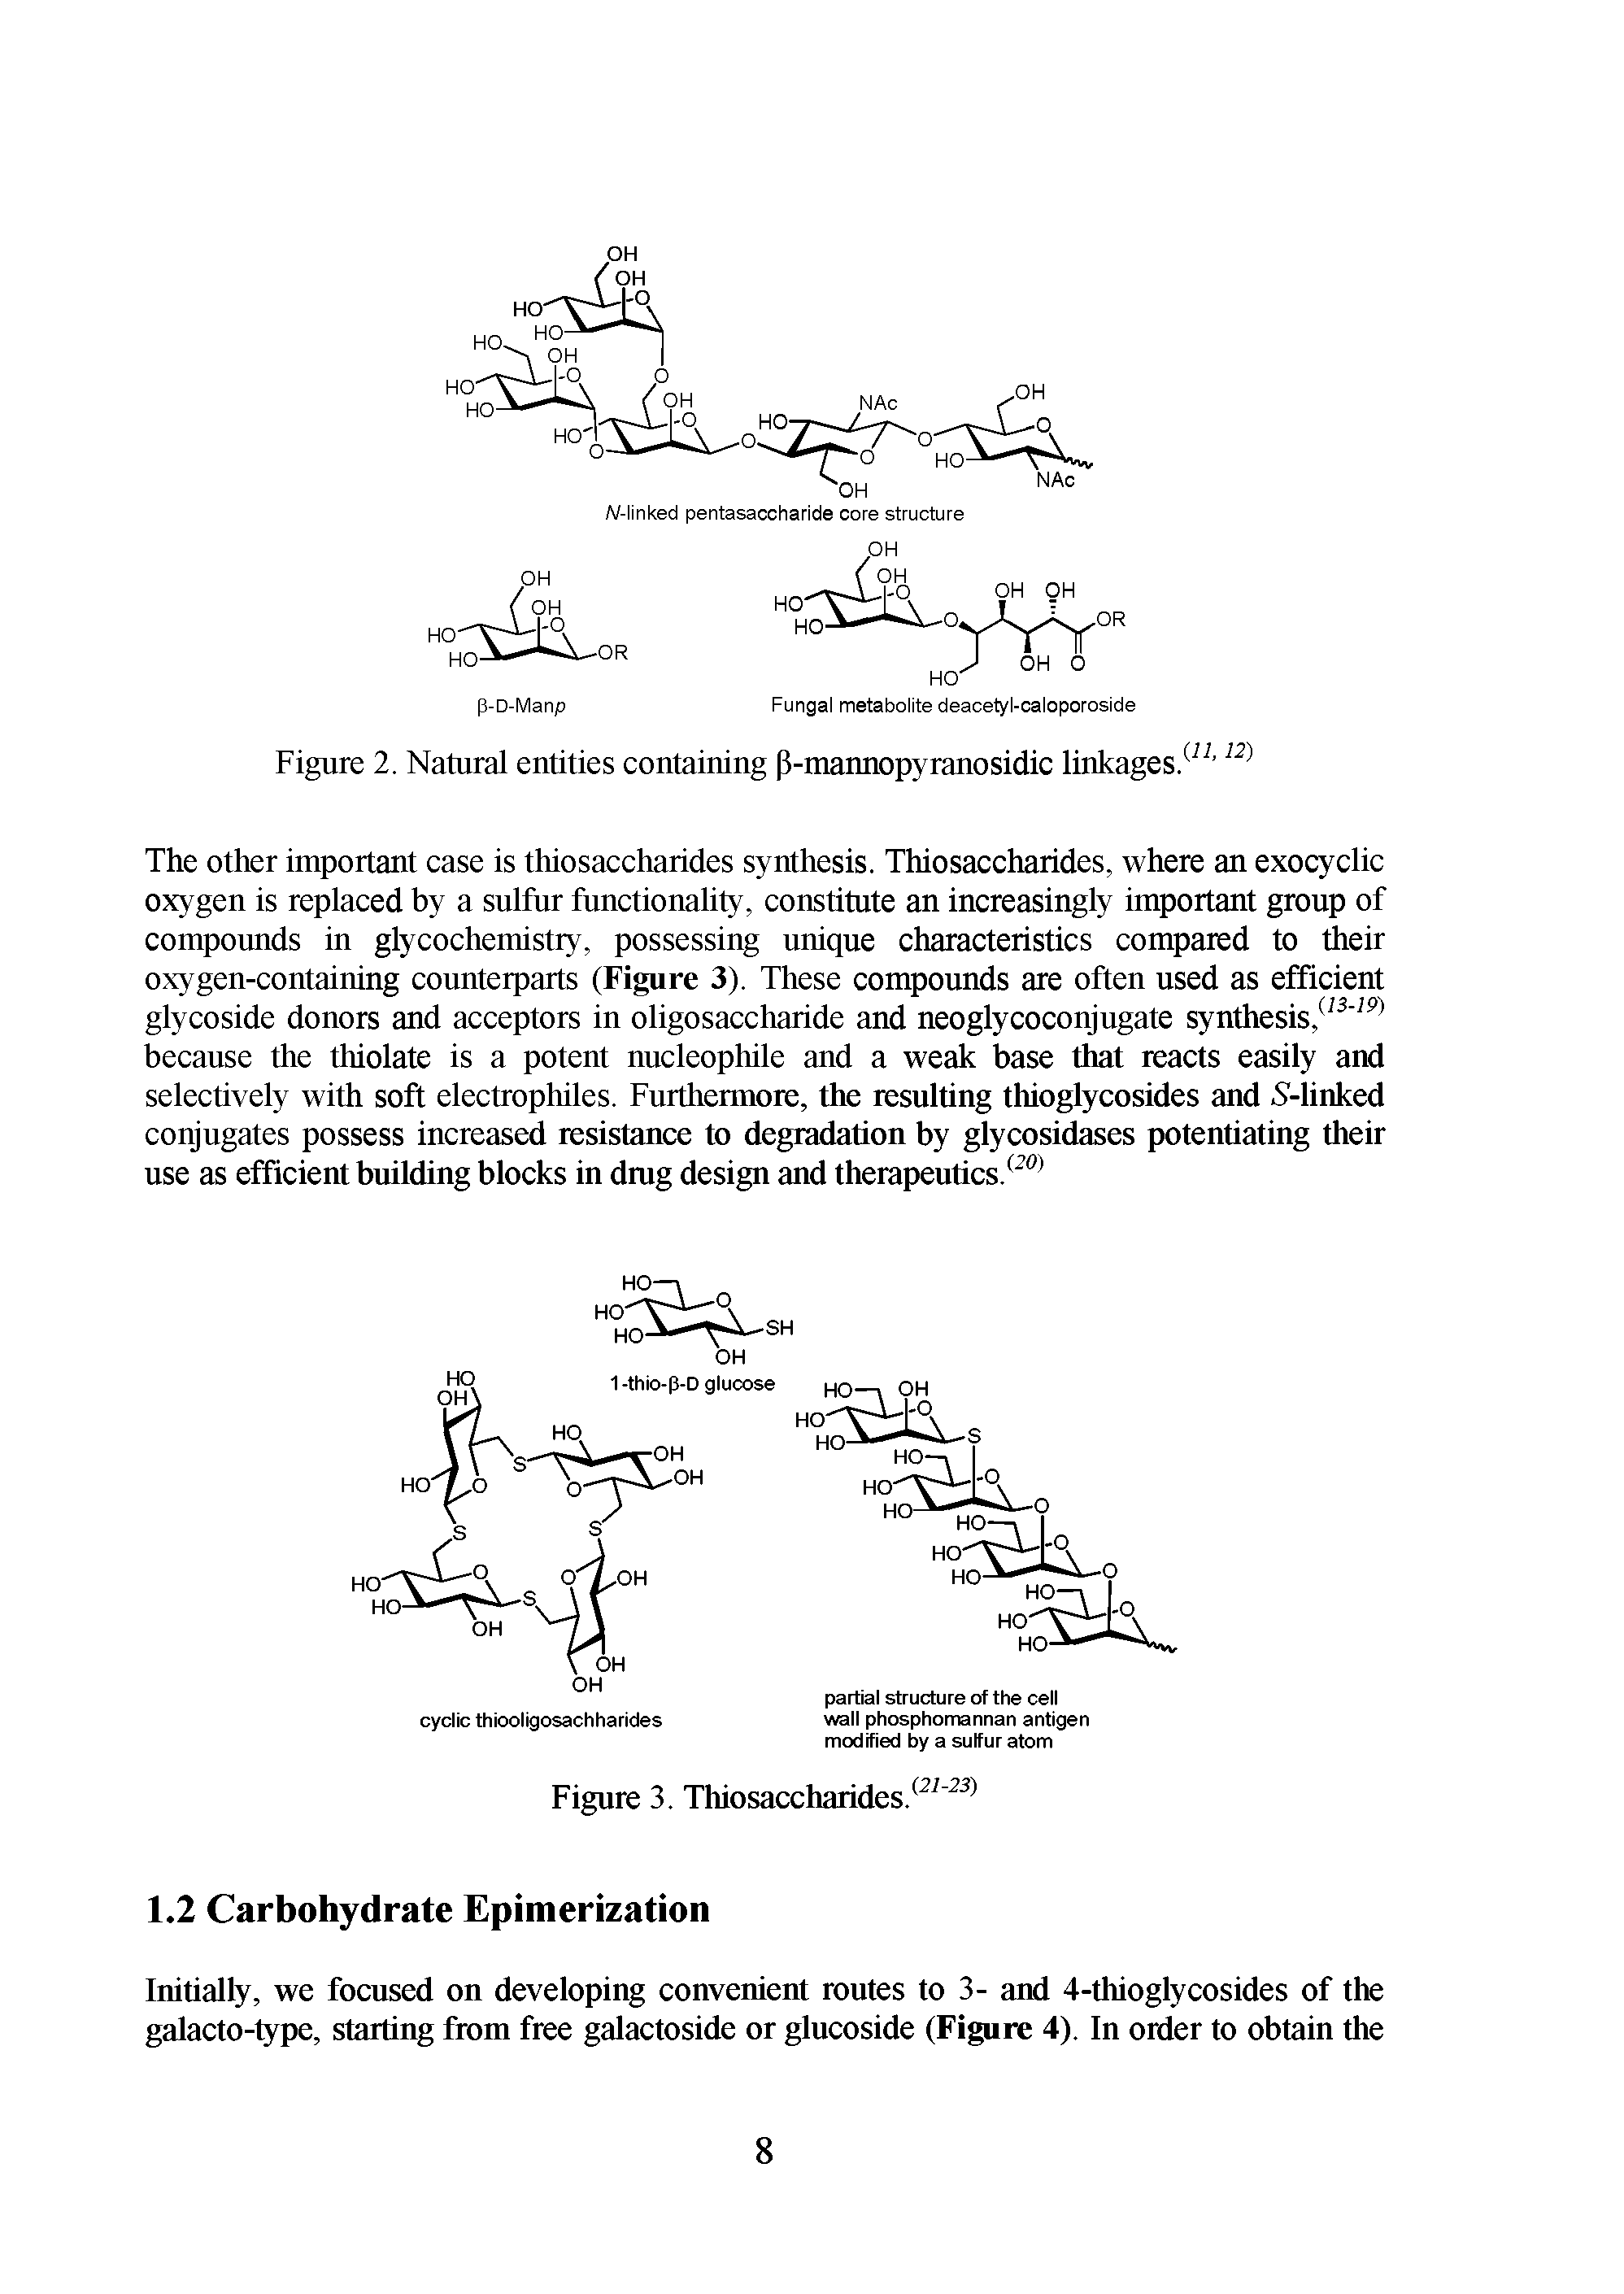 Figure 2. Natural entities containing p-mannopyranosidic linkages...